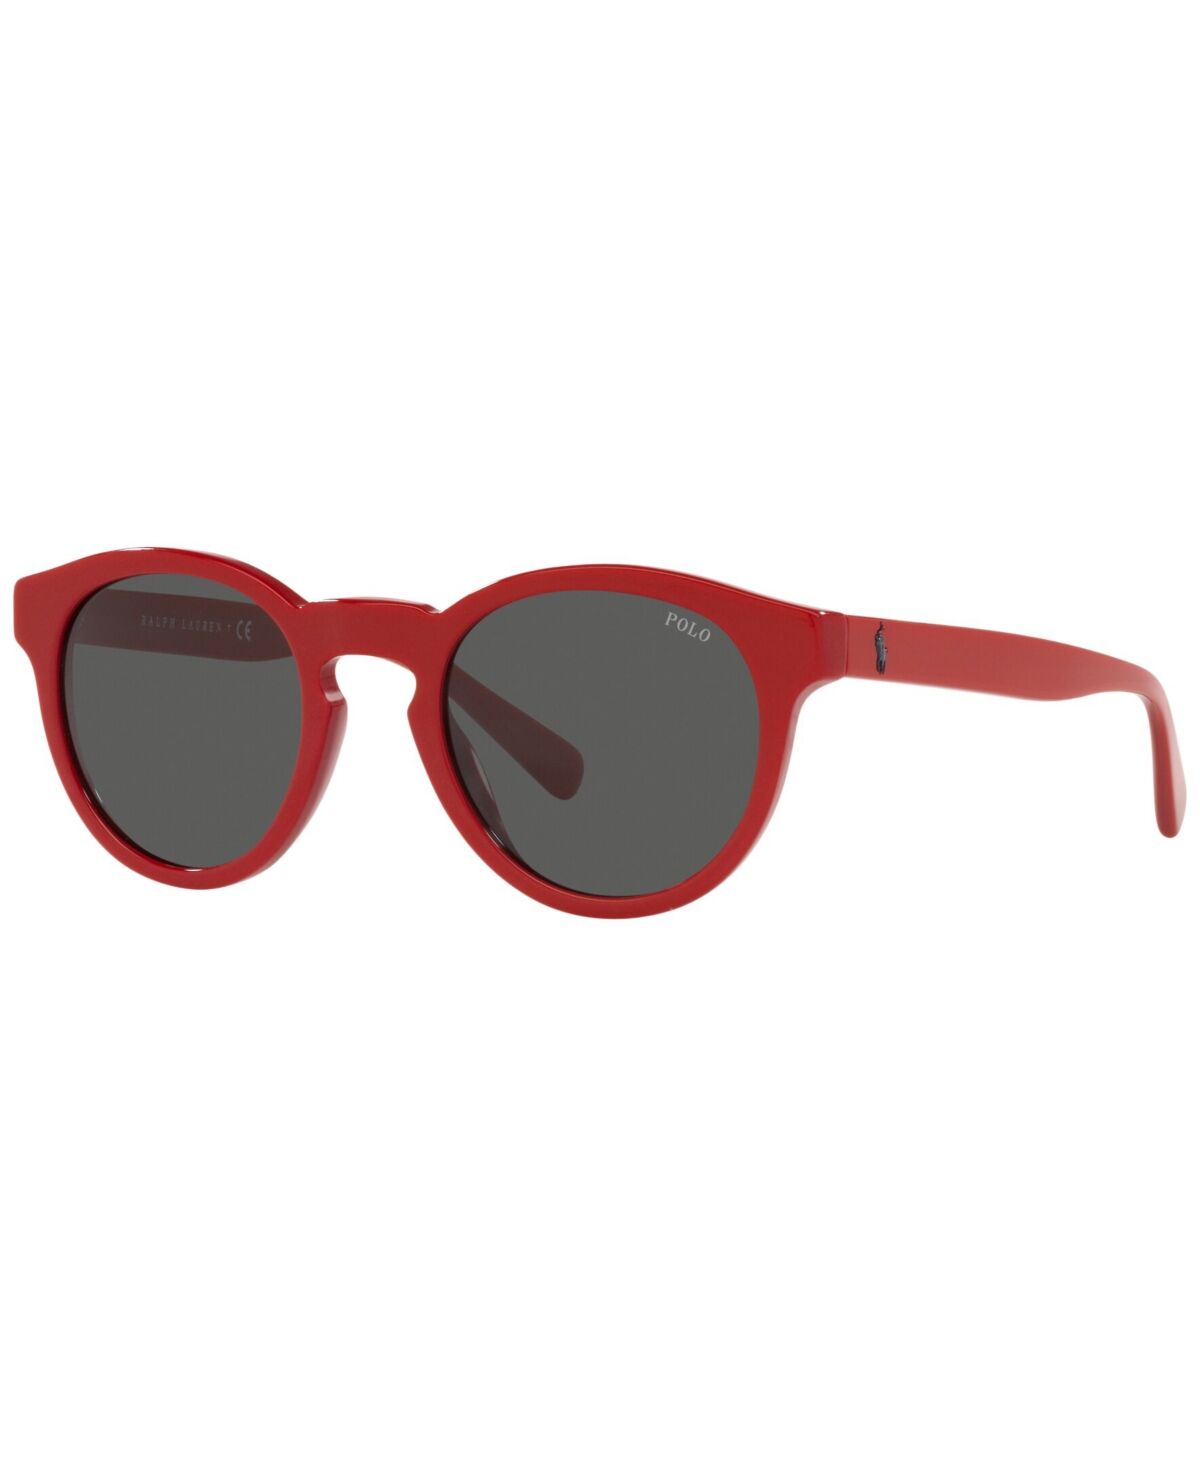 Ralph Lauren Polo Ralph Lauren Men's Sunglasses, PH4184 - Shiny Red